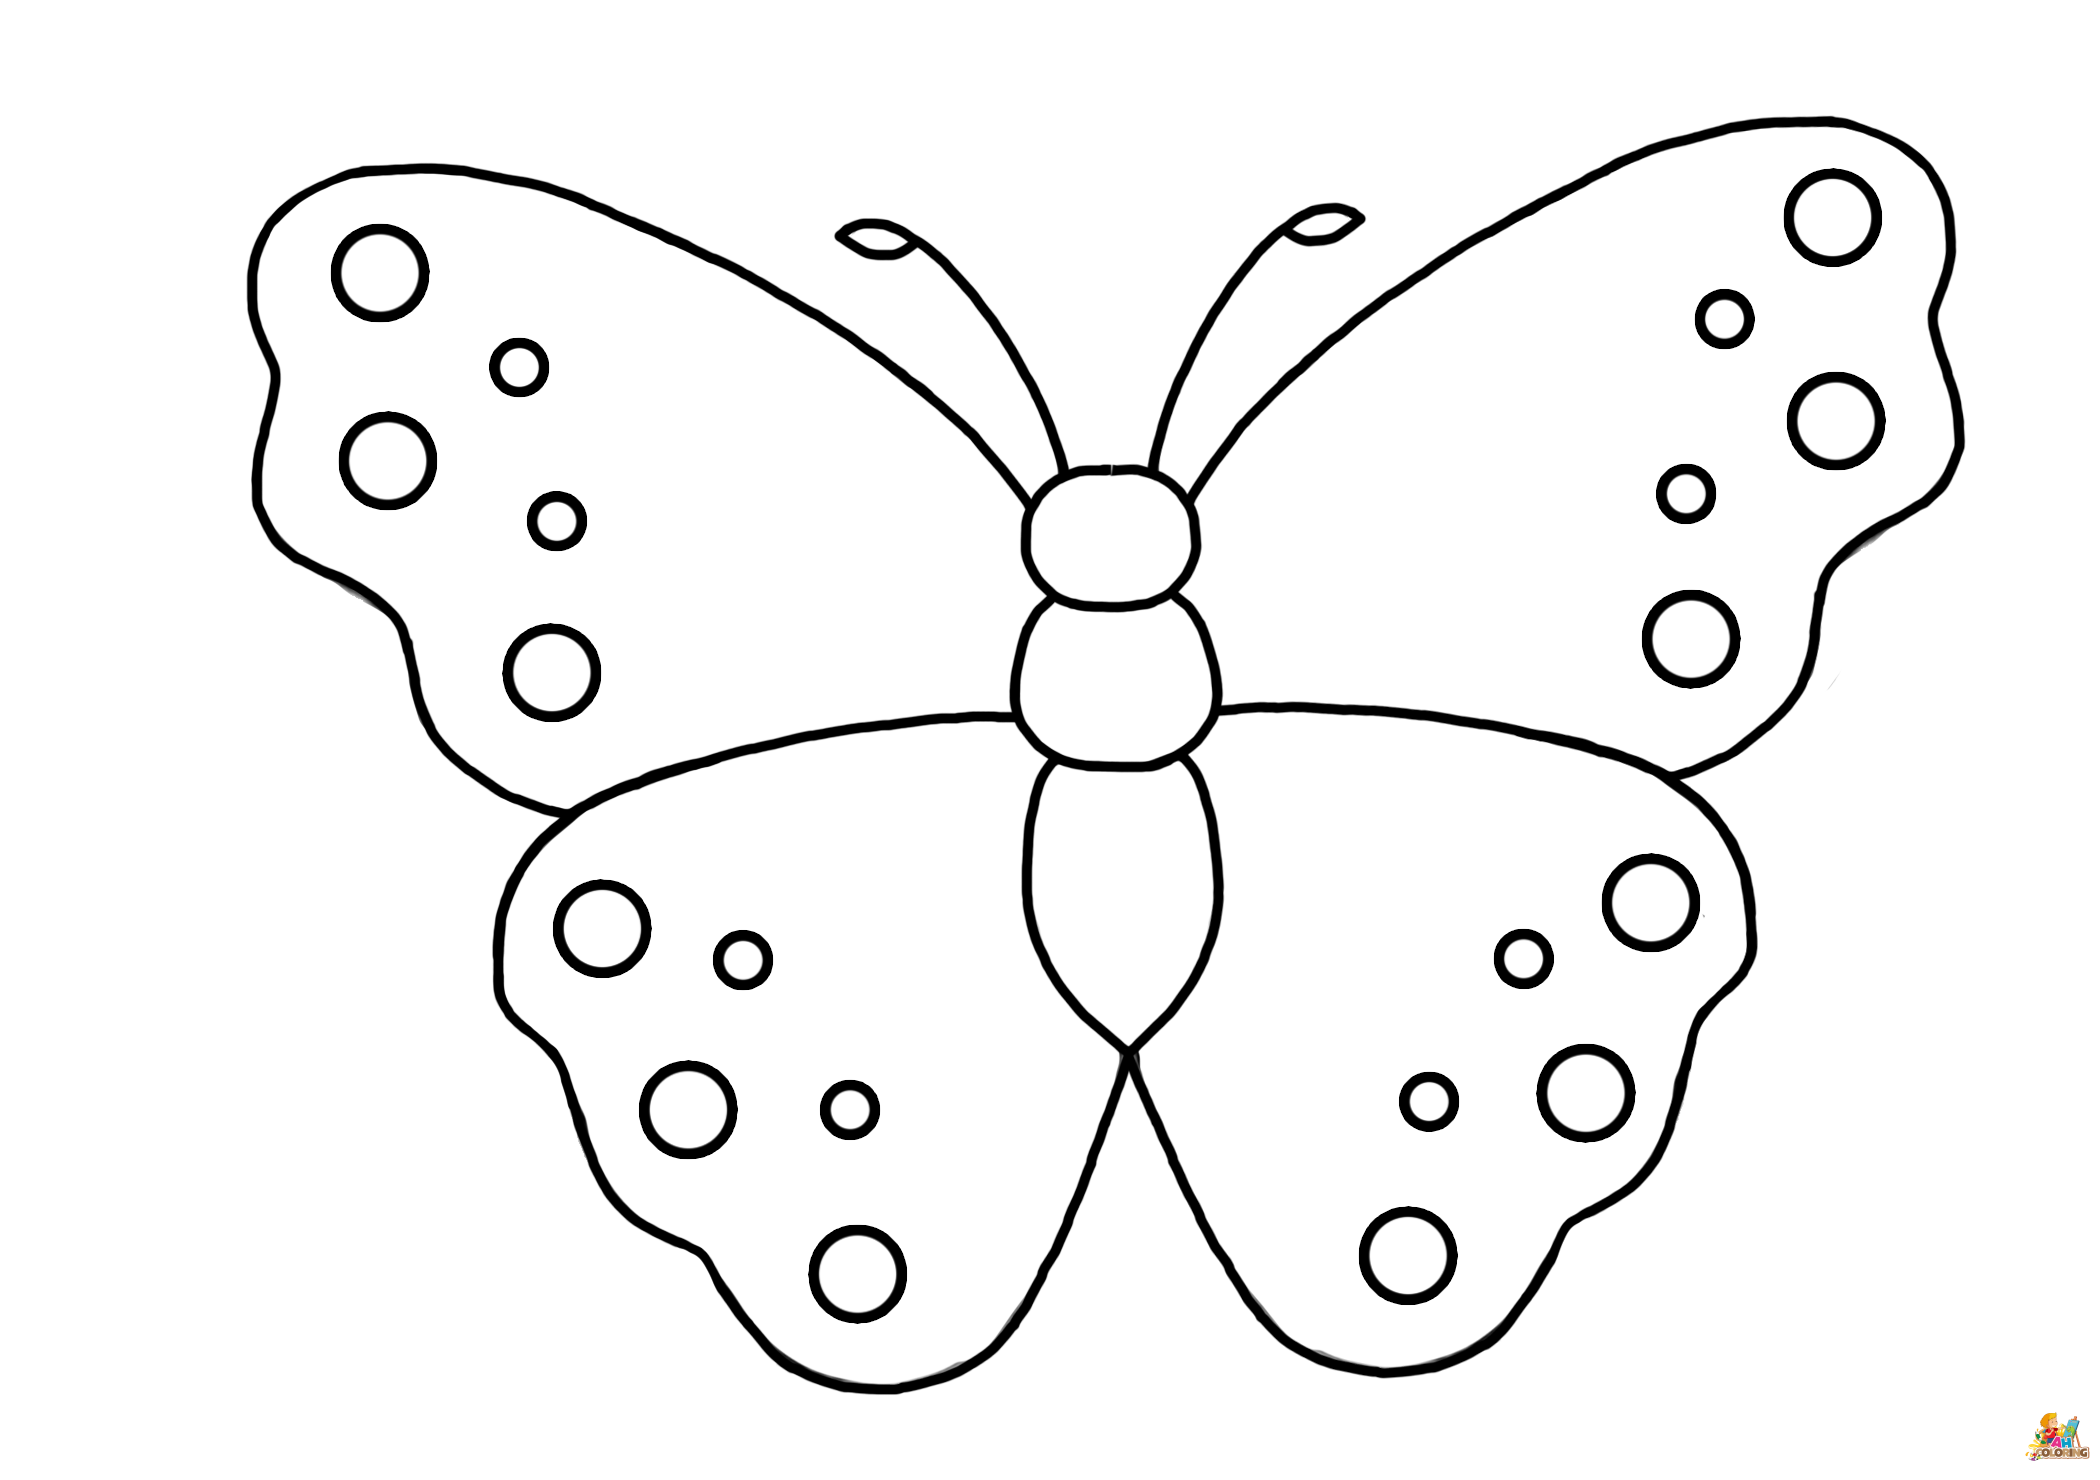 Раскраска "бабочки". Бабочкаэ раскраска для детей. Бабочка для раскрашивания. Бабочка раскраска для малышей. Бабочки раскраски для детей 5 6 лет